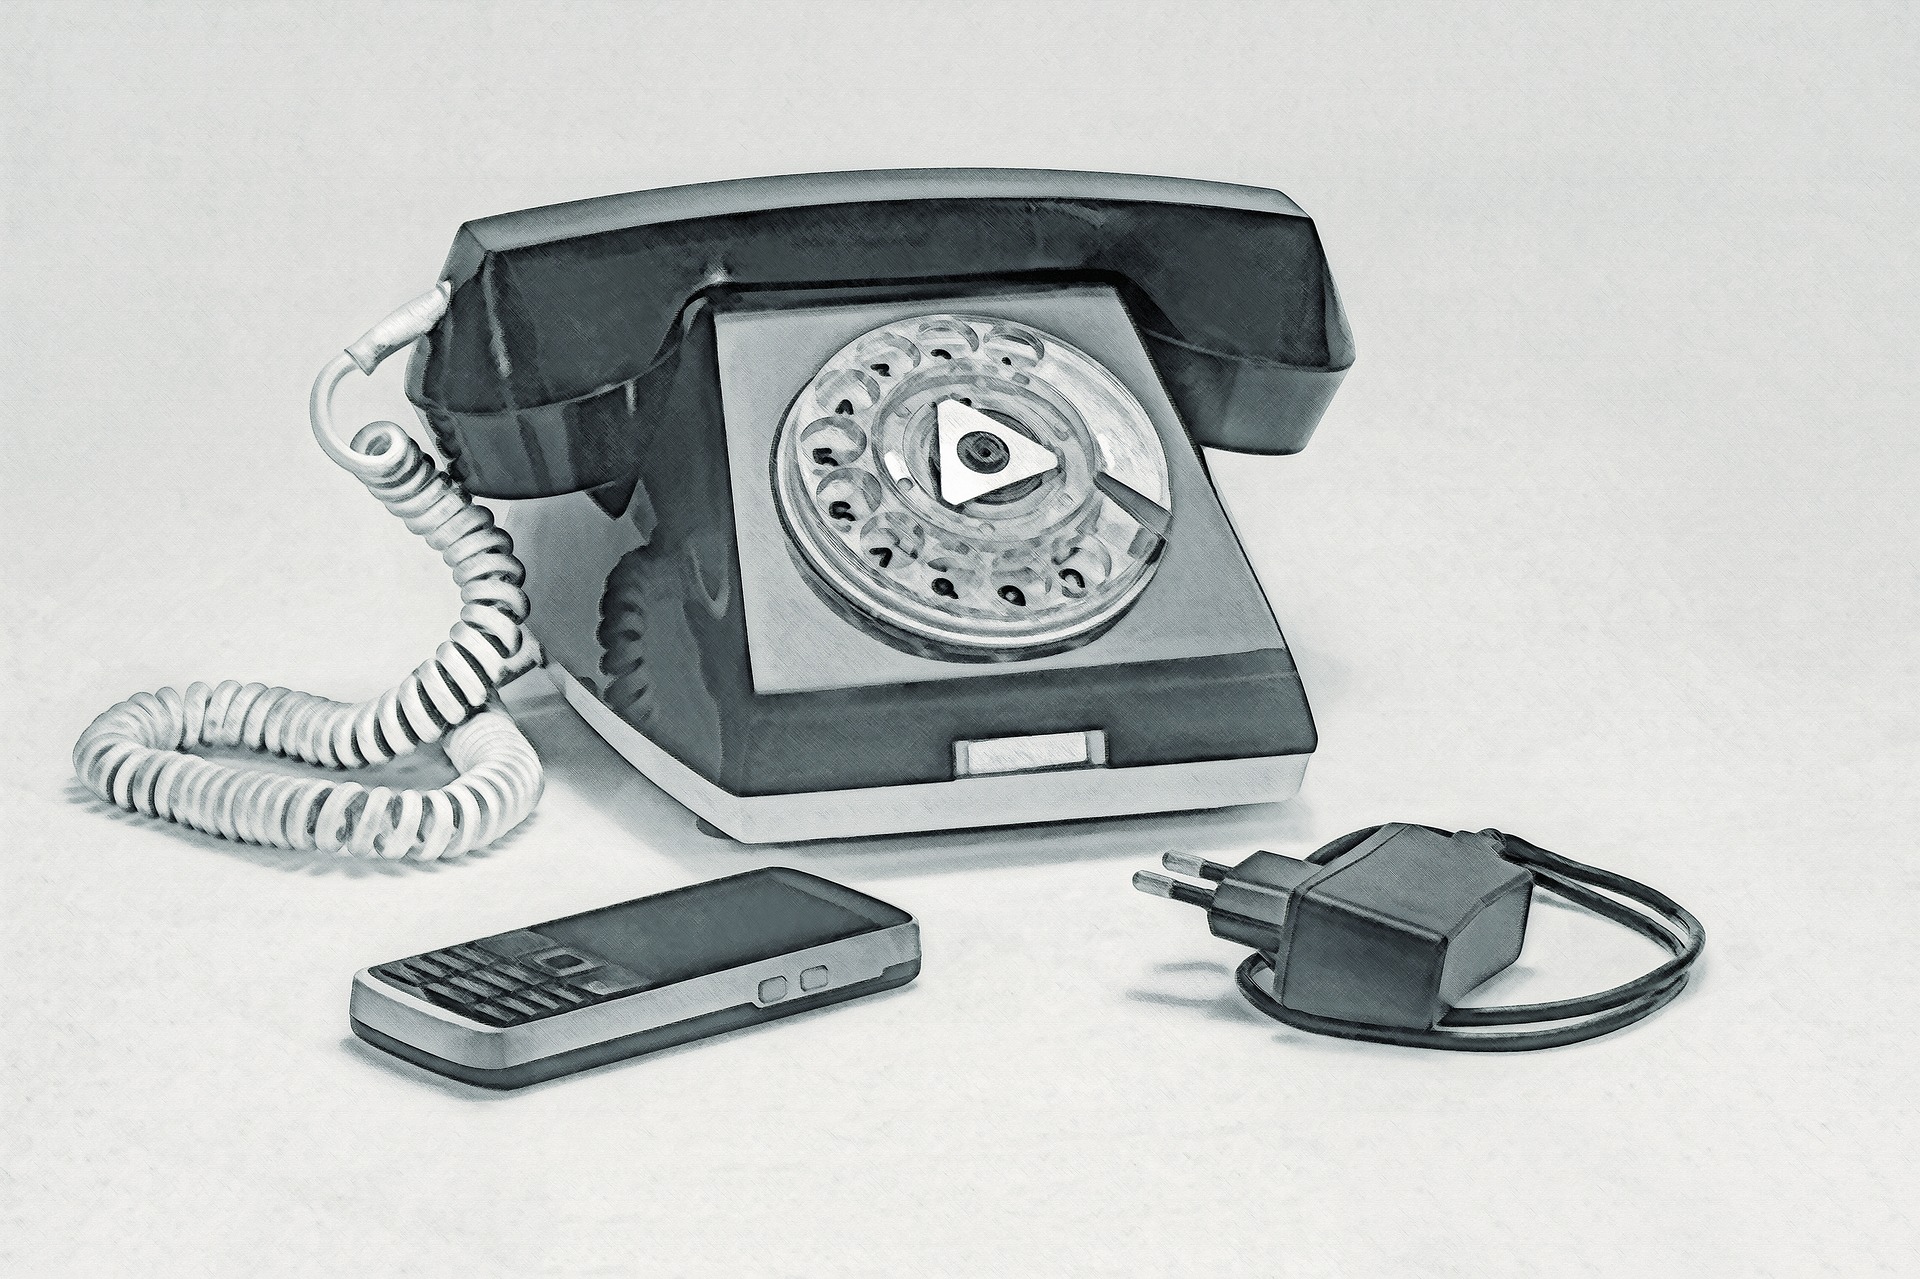 landline-phone-gcdf49a97d_1920